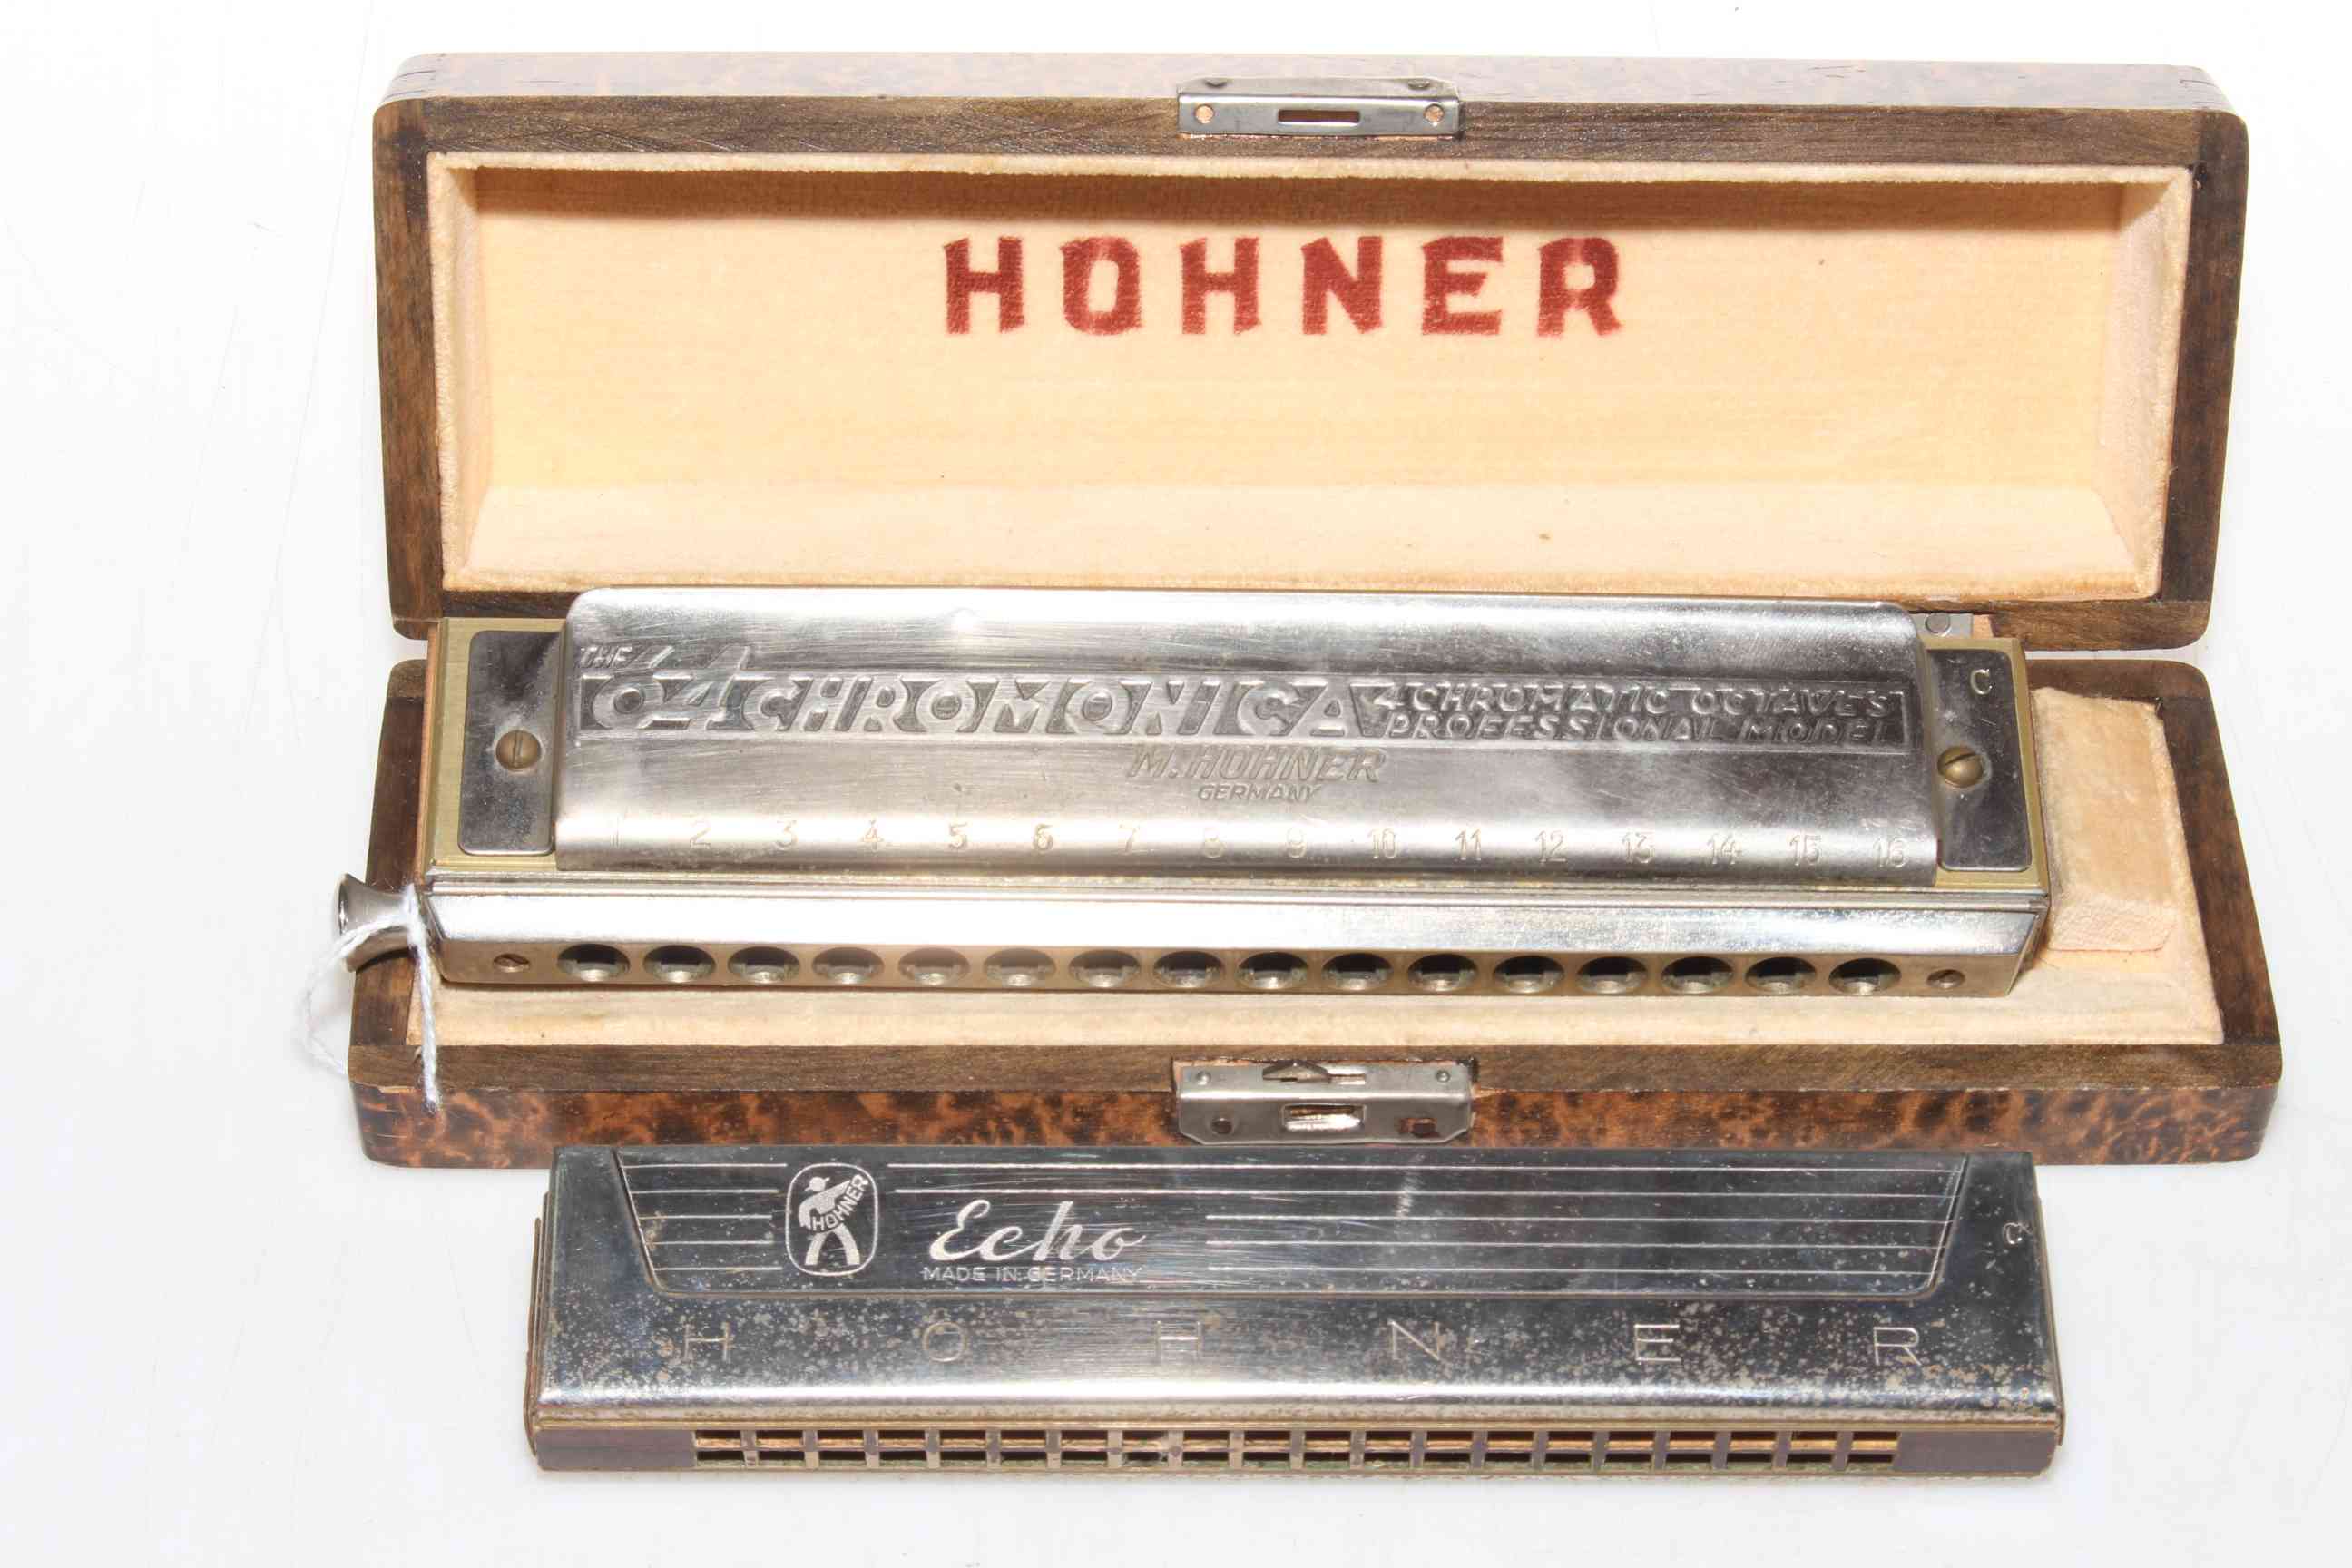 Hohner Chromonica professional harmonica and an Echo model.